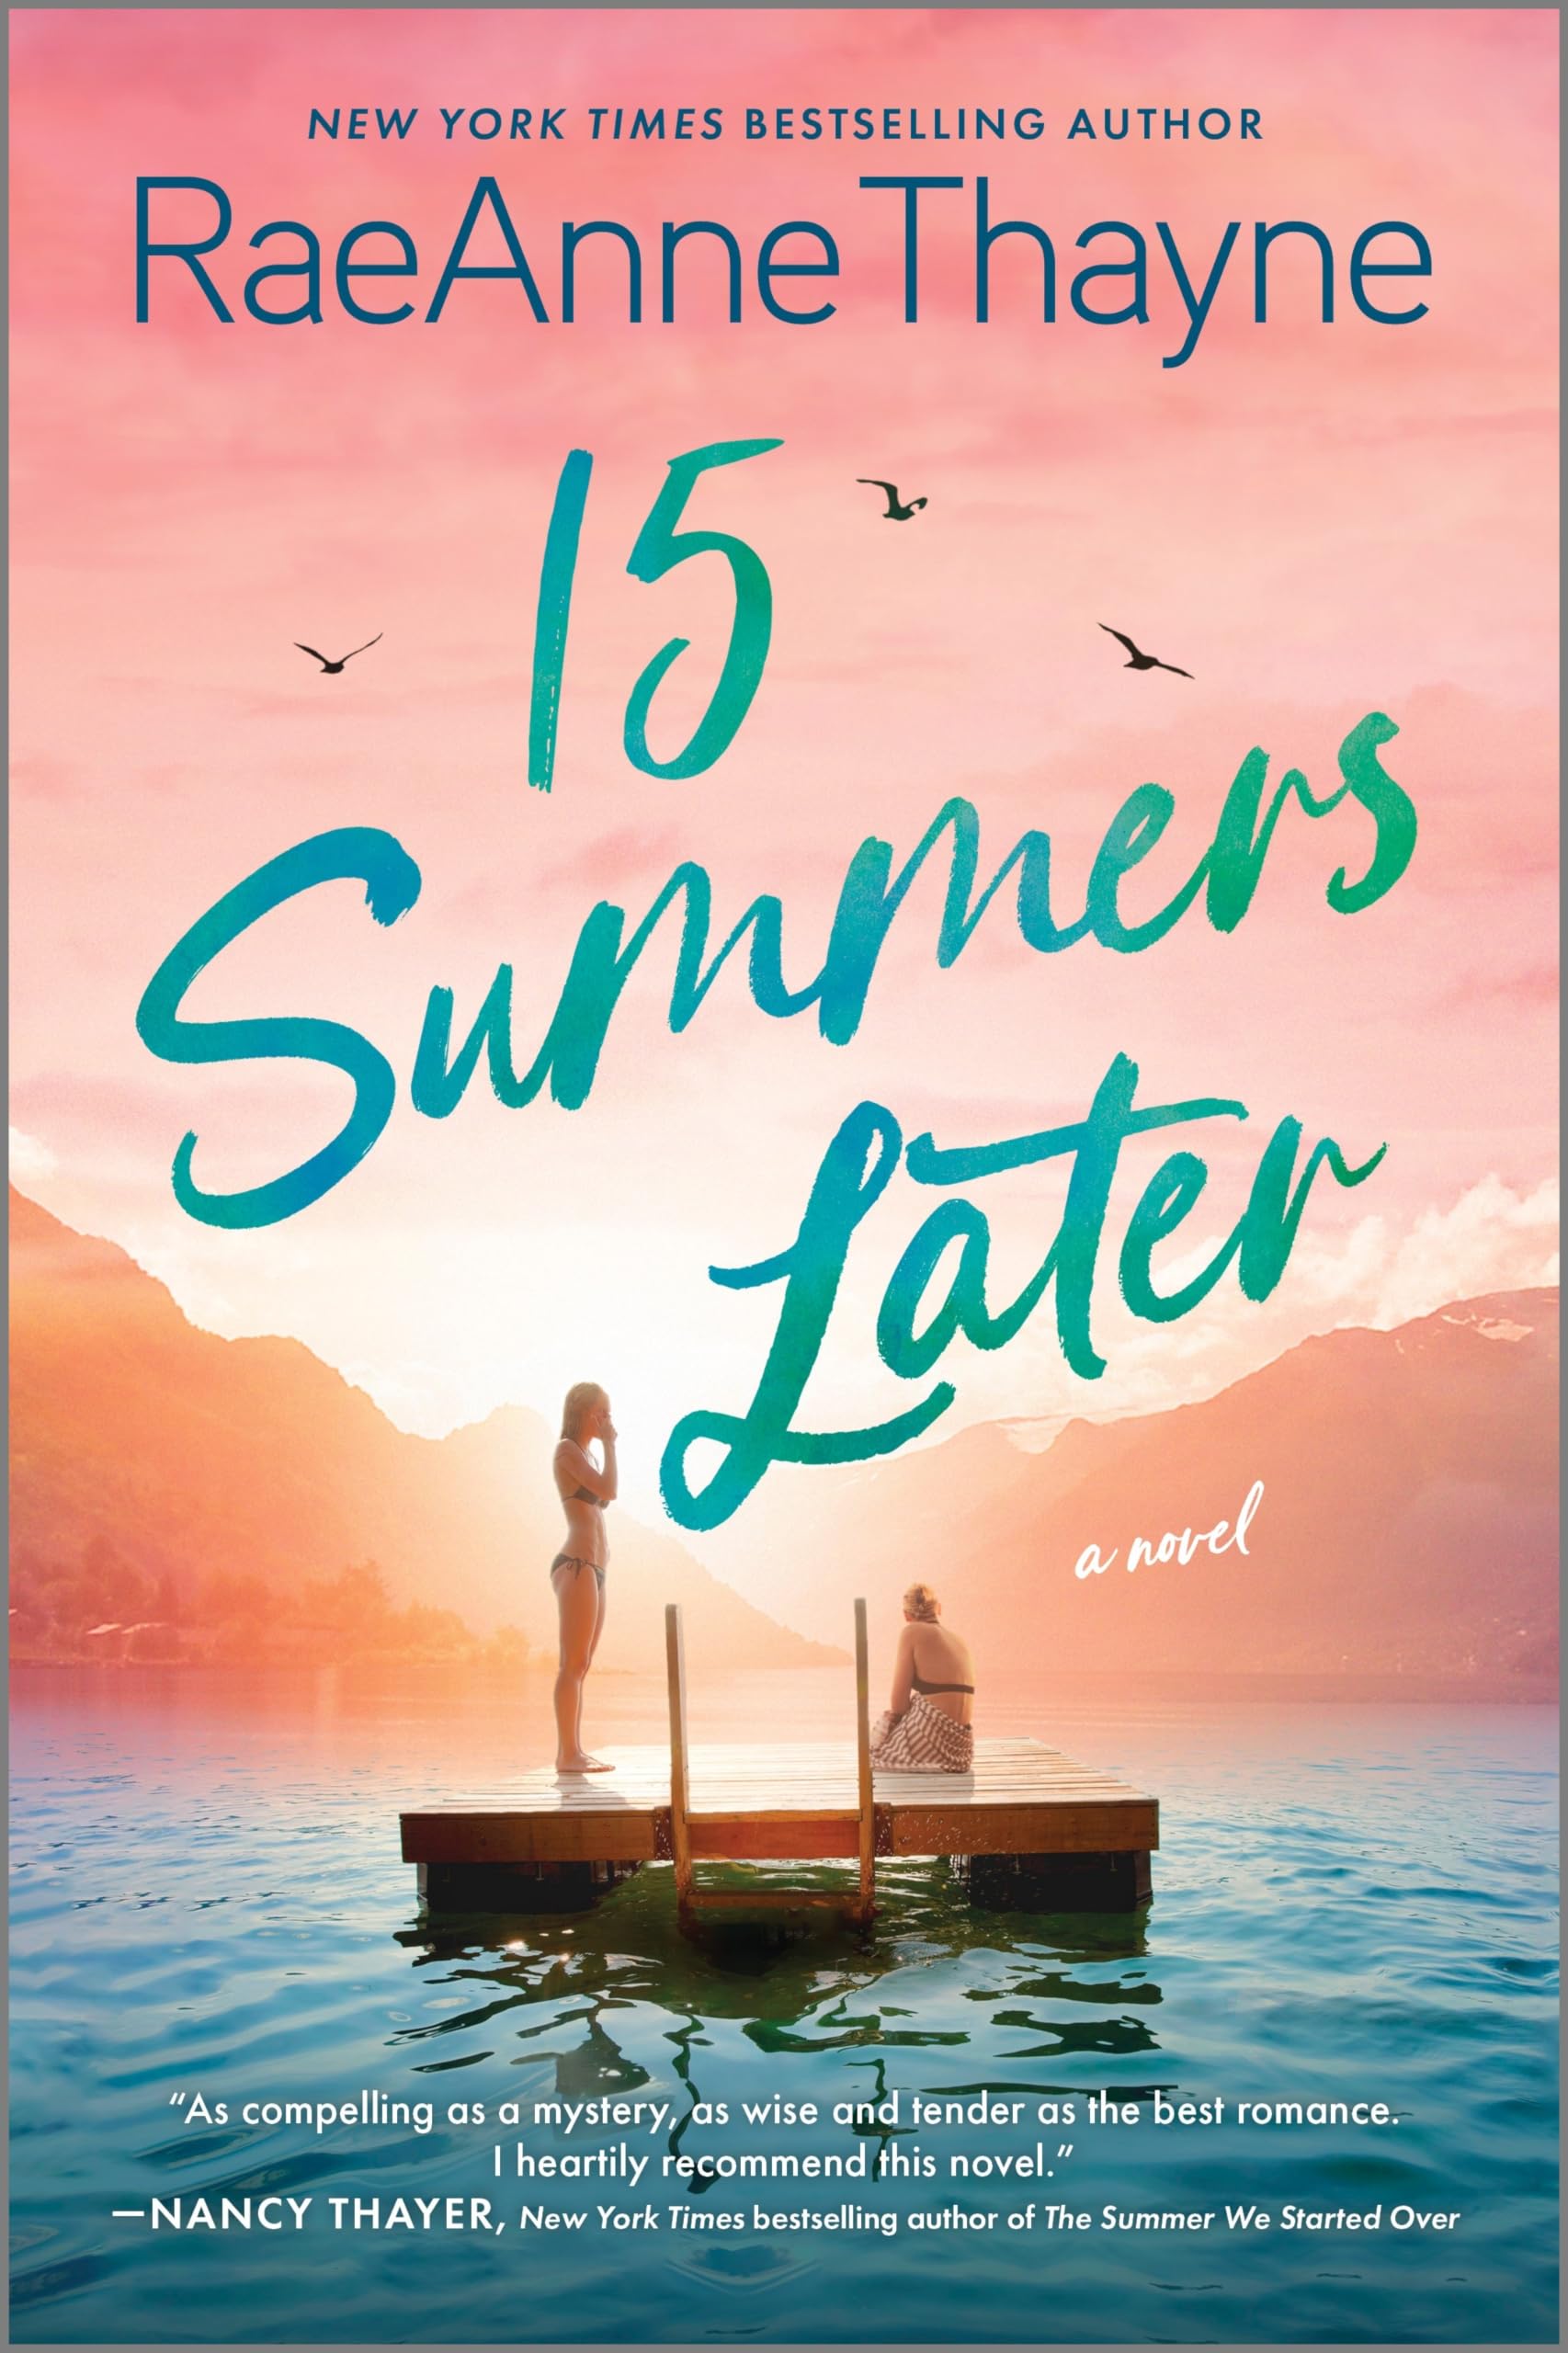 15 Summers Later: A Feel-Good Beach Read by Thayne, Raeanne